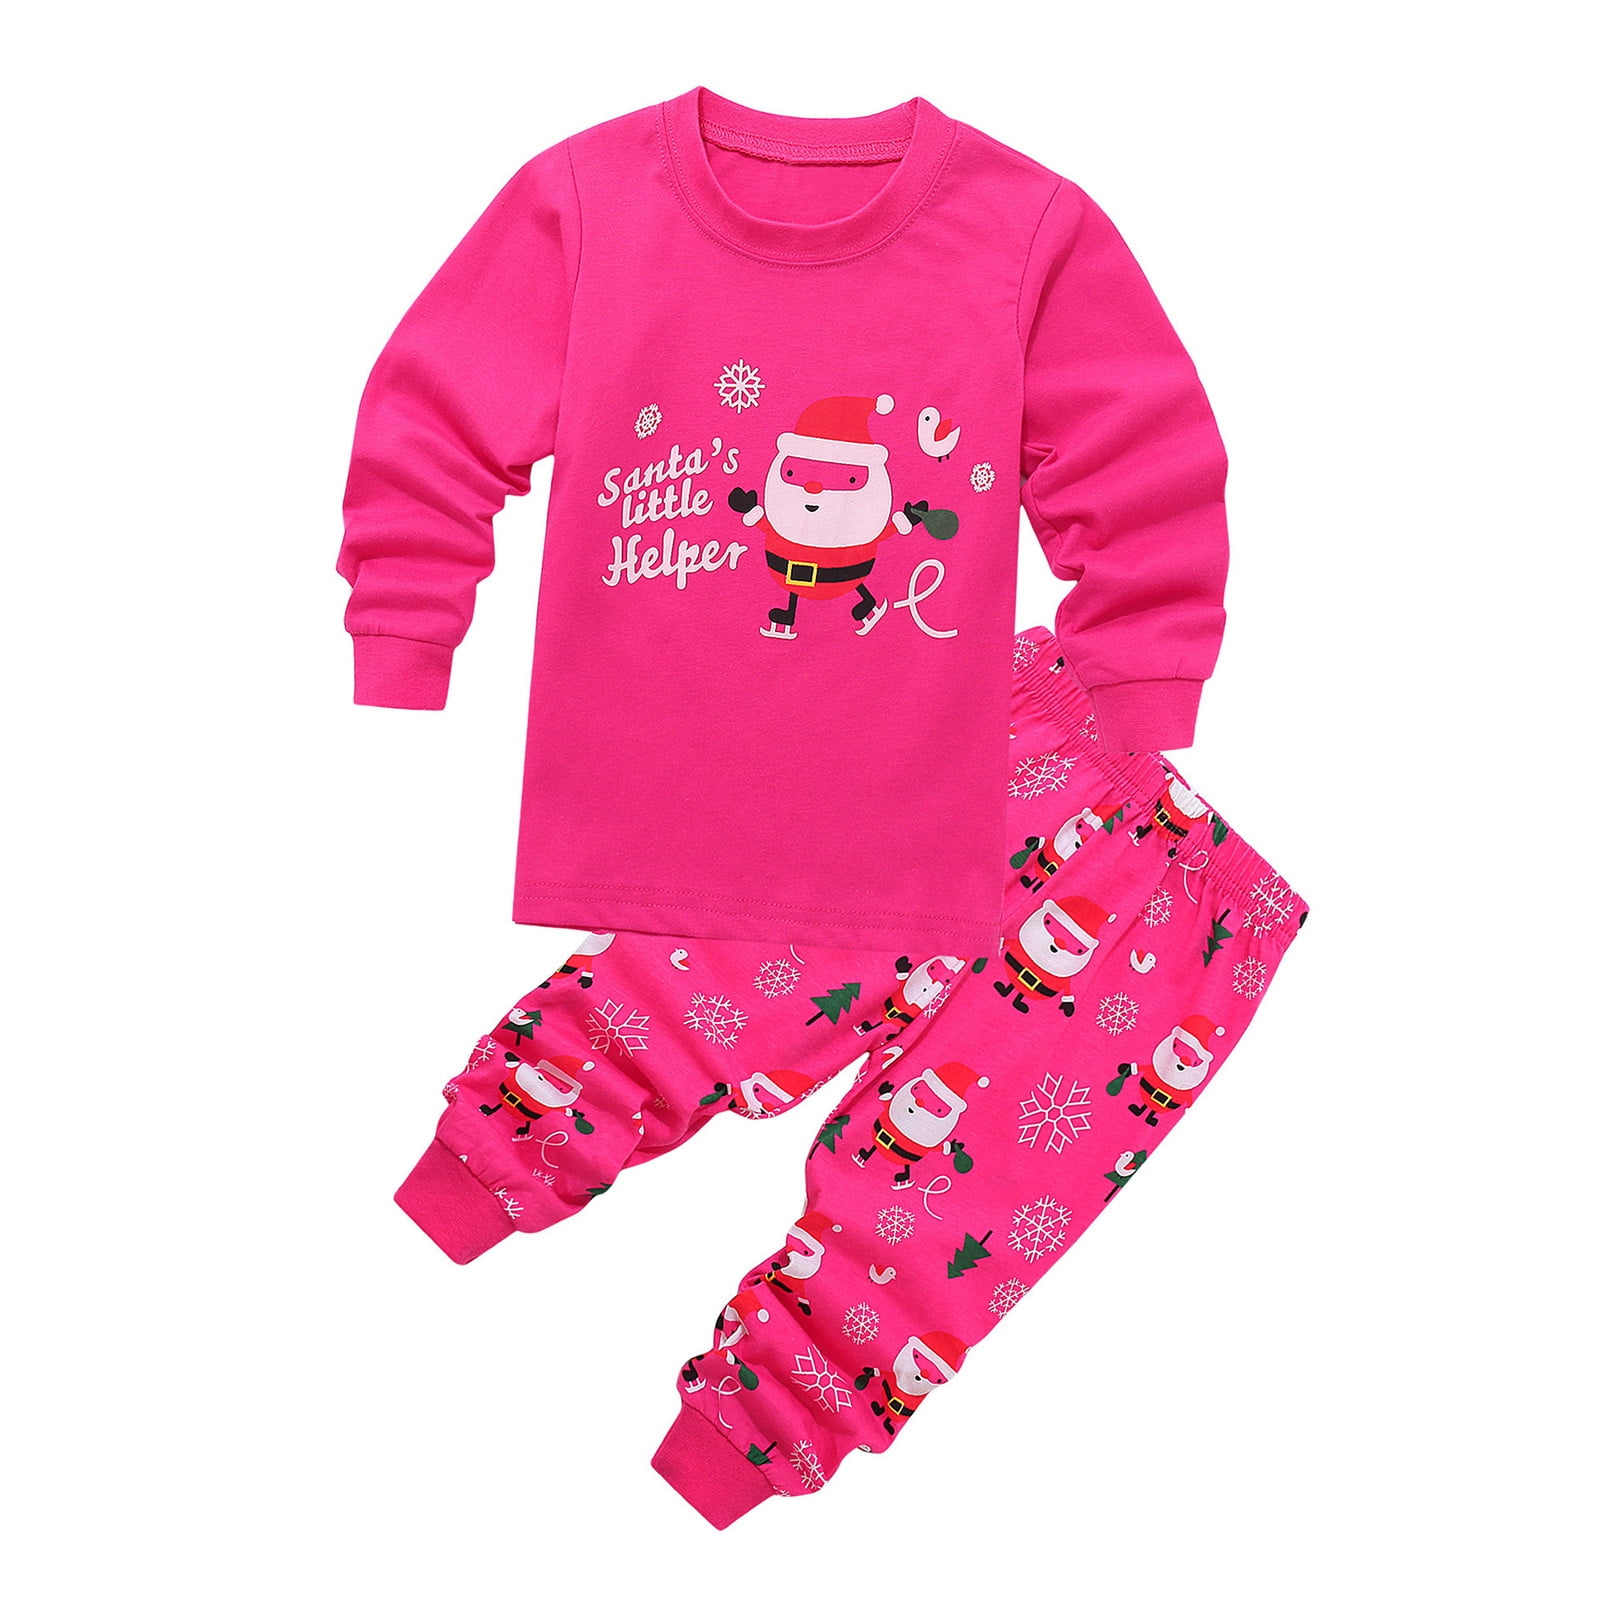 Little Boys Girls Christmas Cotton Pajamas Children Santa Claus PJS Gift Set Kids Sleepwear Clothes 